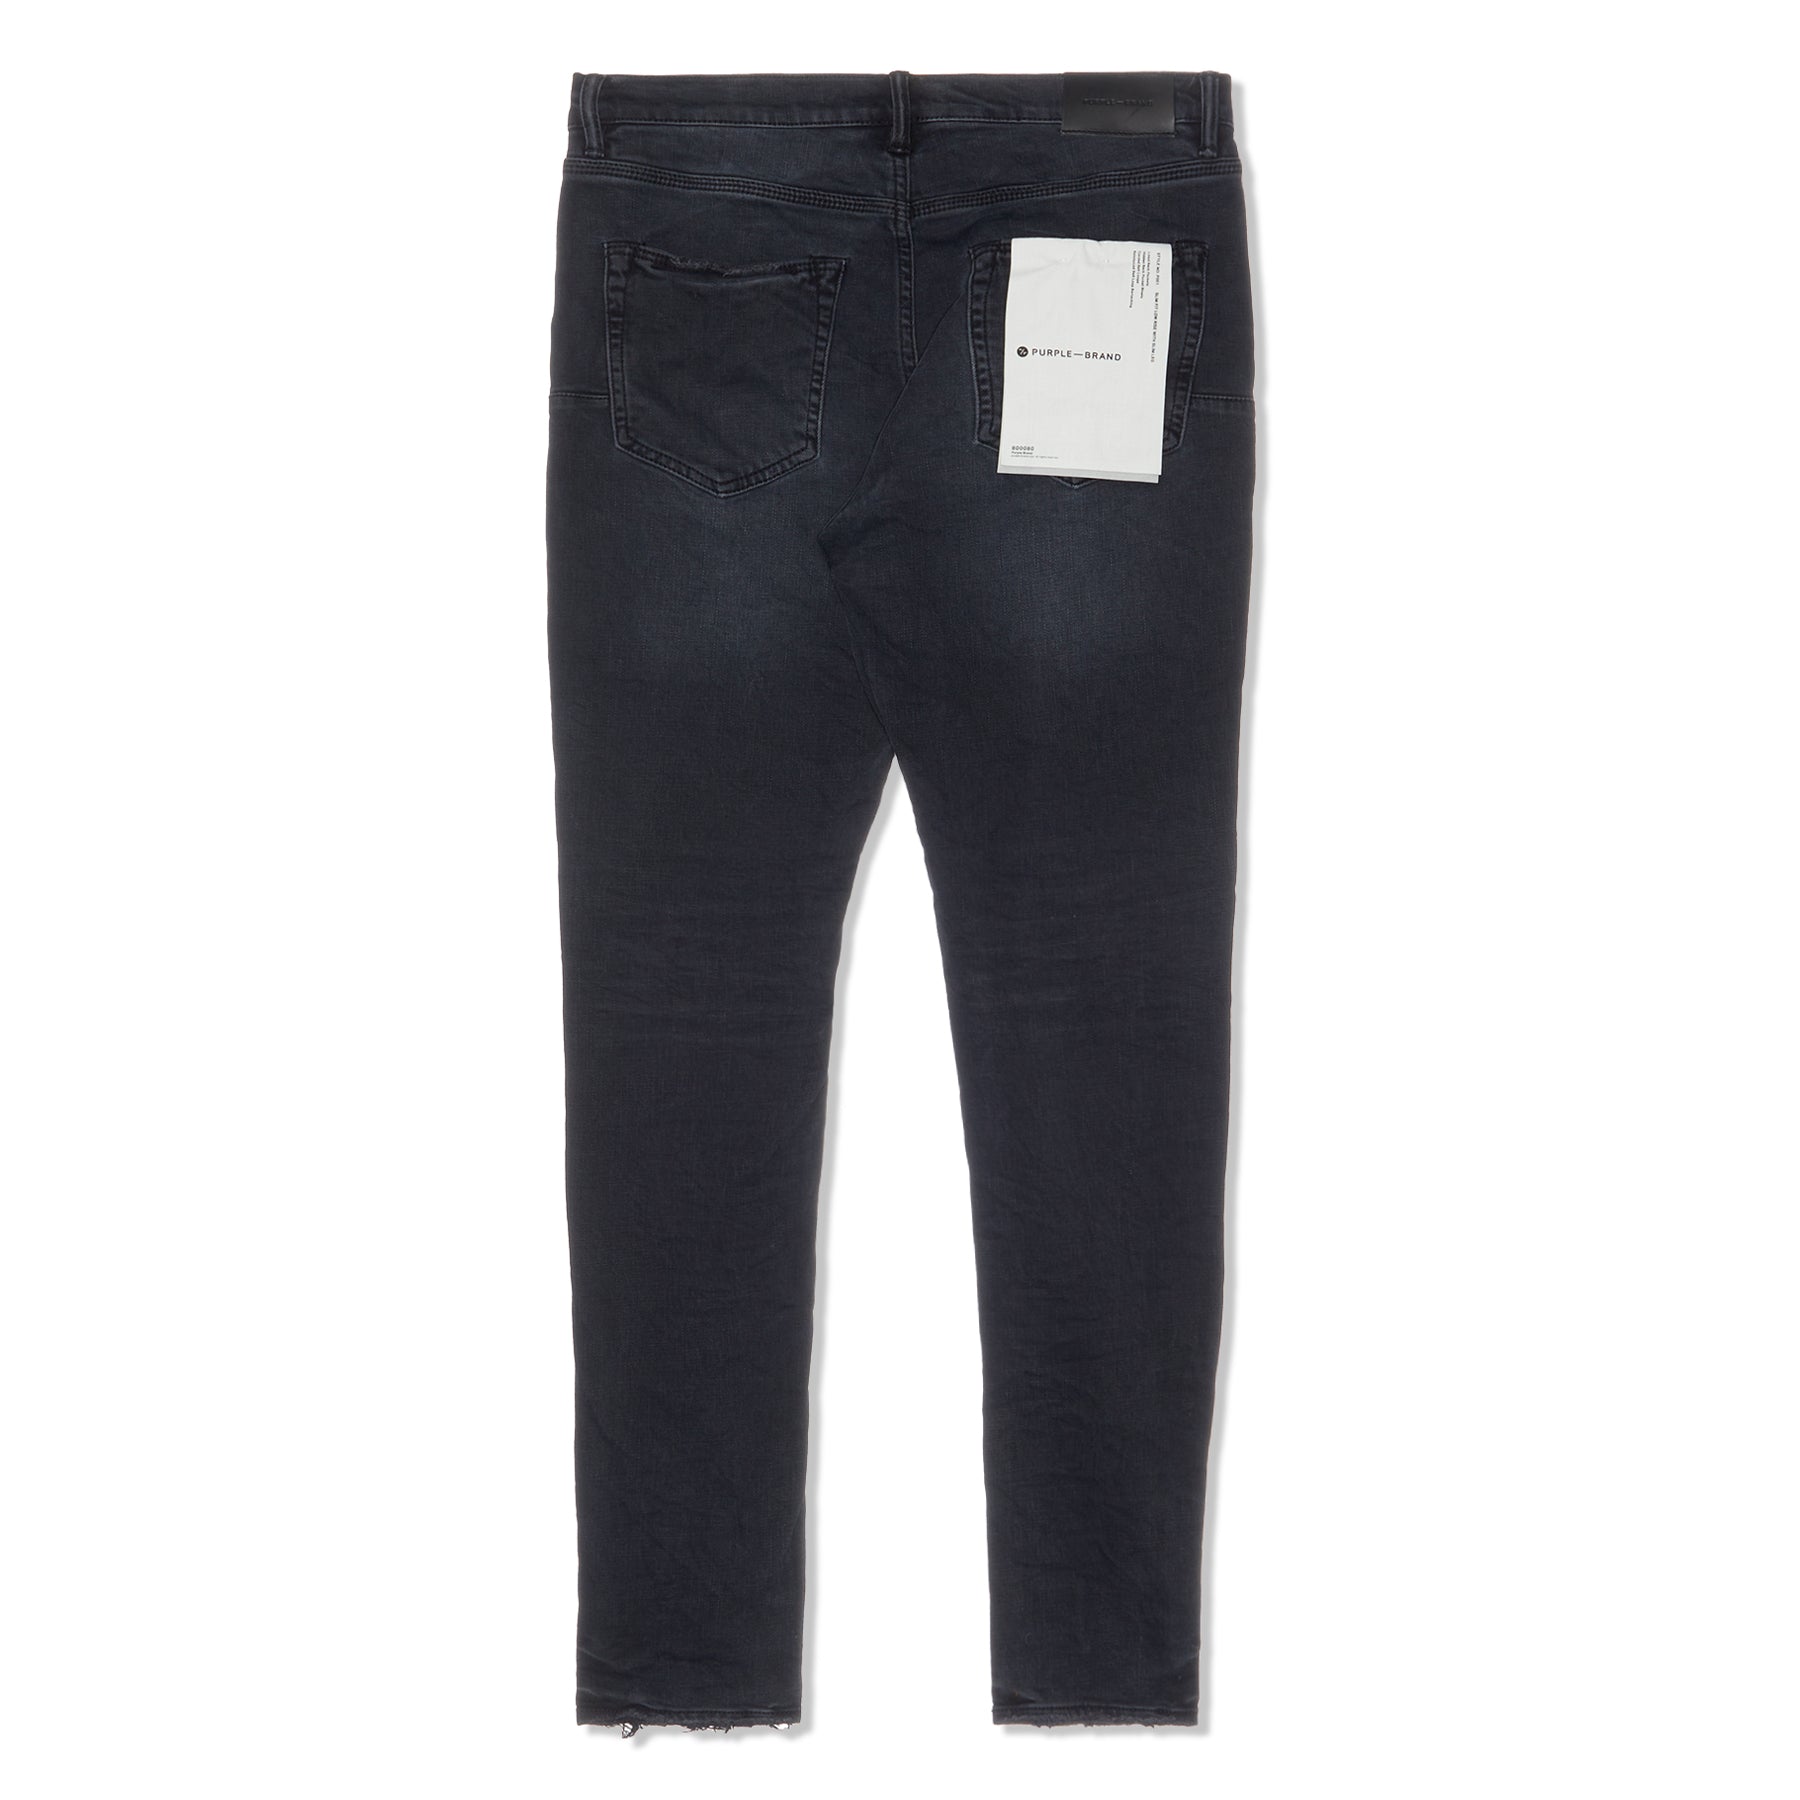 PURPLE Brand Overdye Slim Fit Jeans (Black)